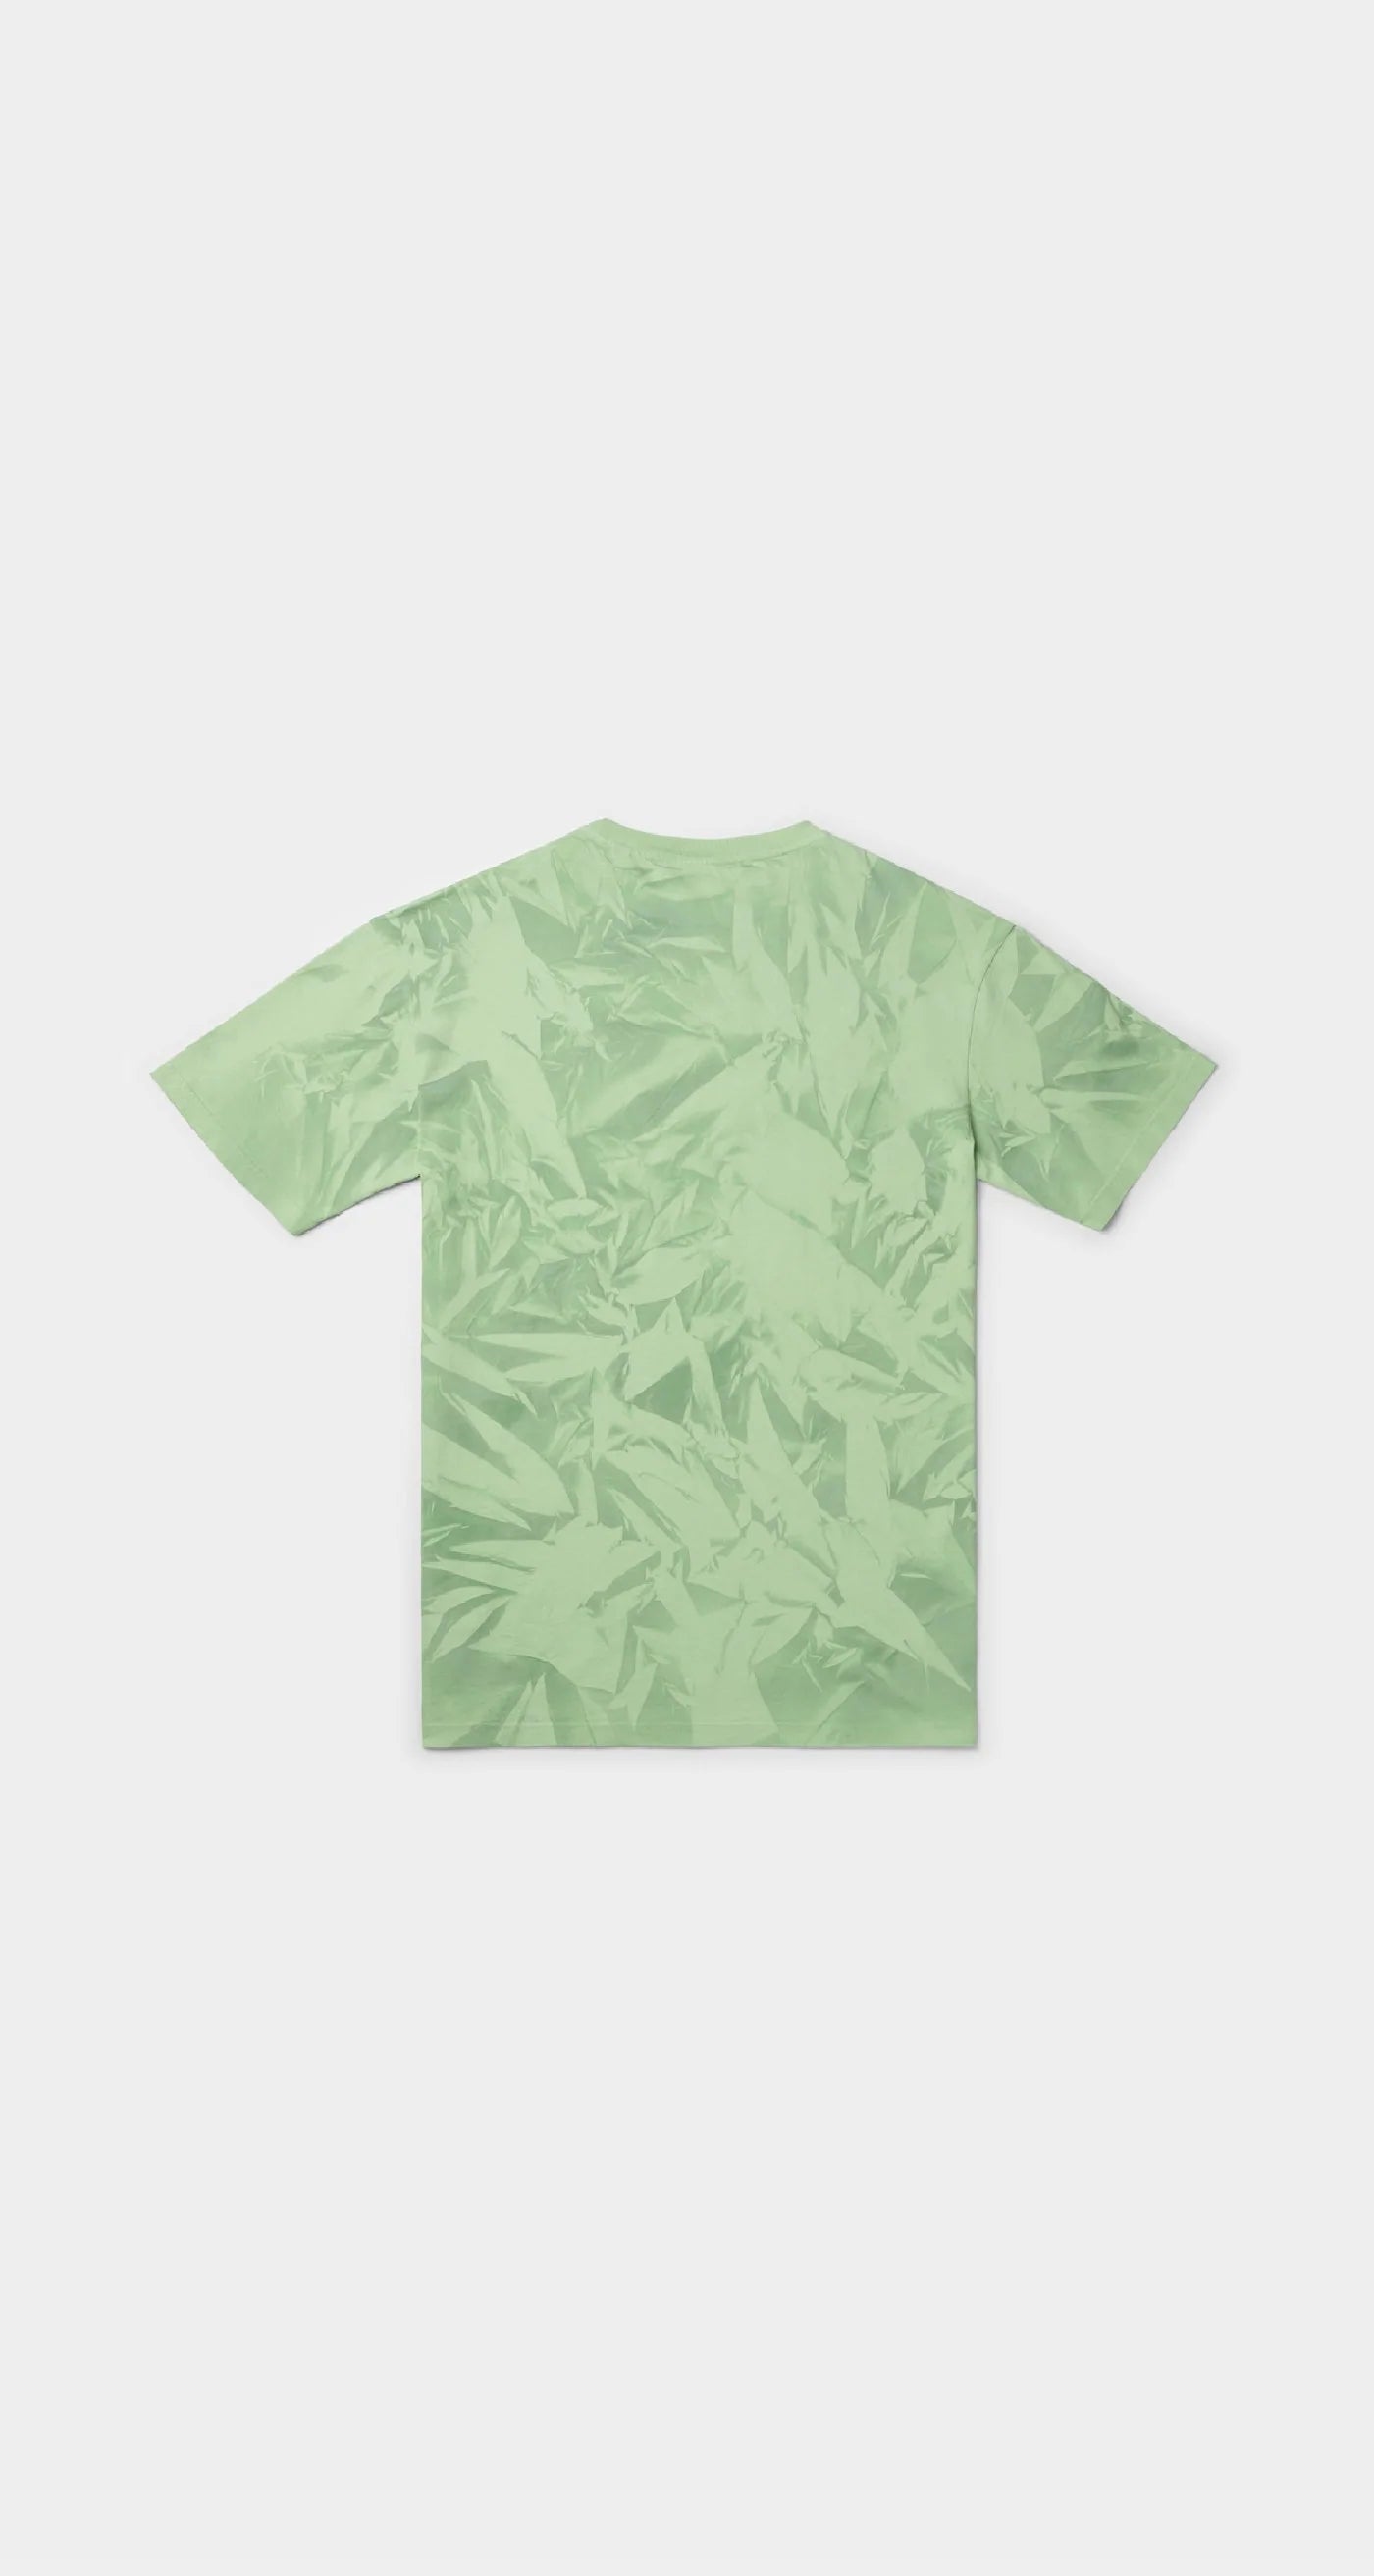 Menef SS T Shirt Green crease